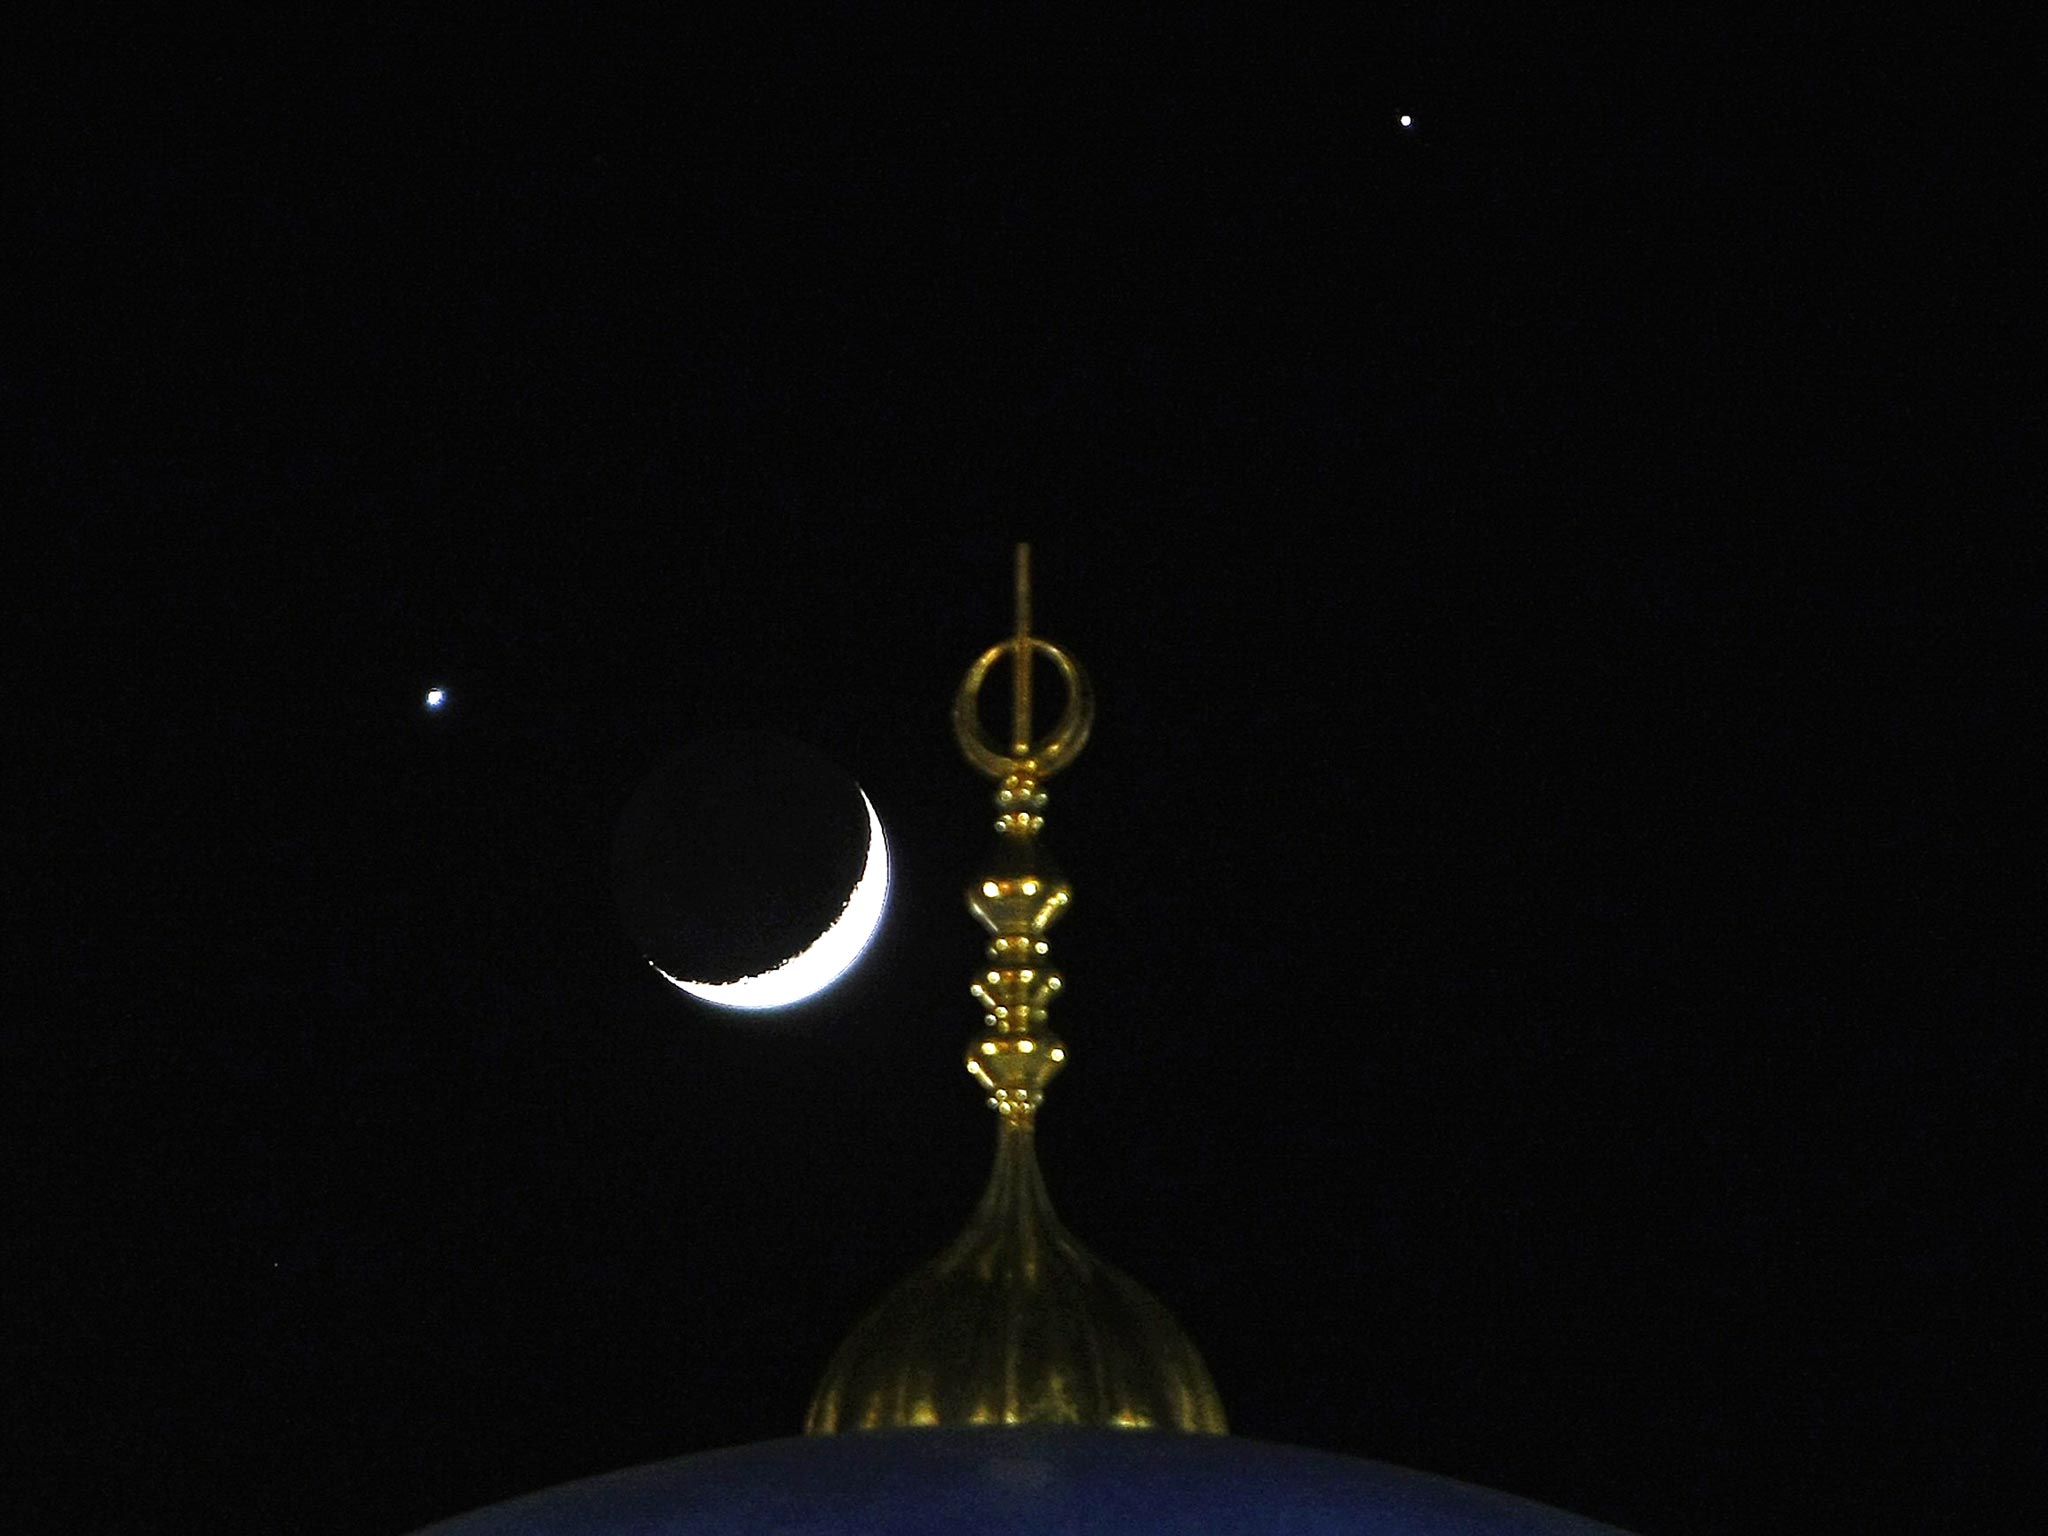 Venus (left) and Jupiter (right) seen above a crescent Moon